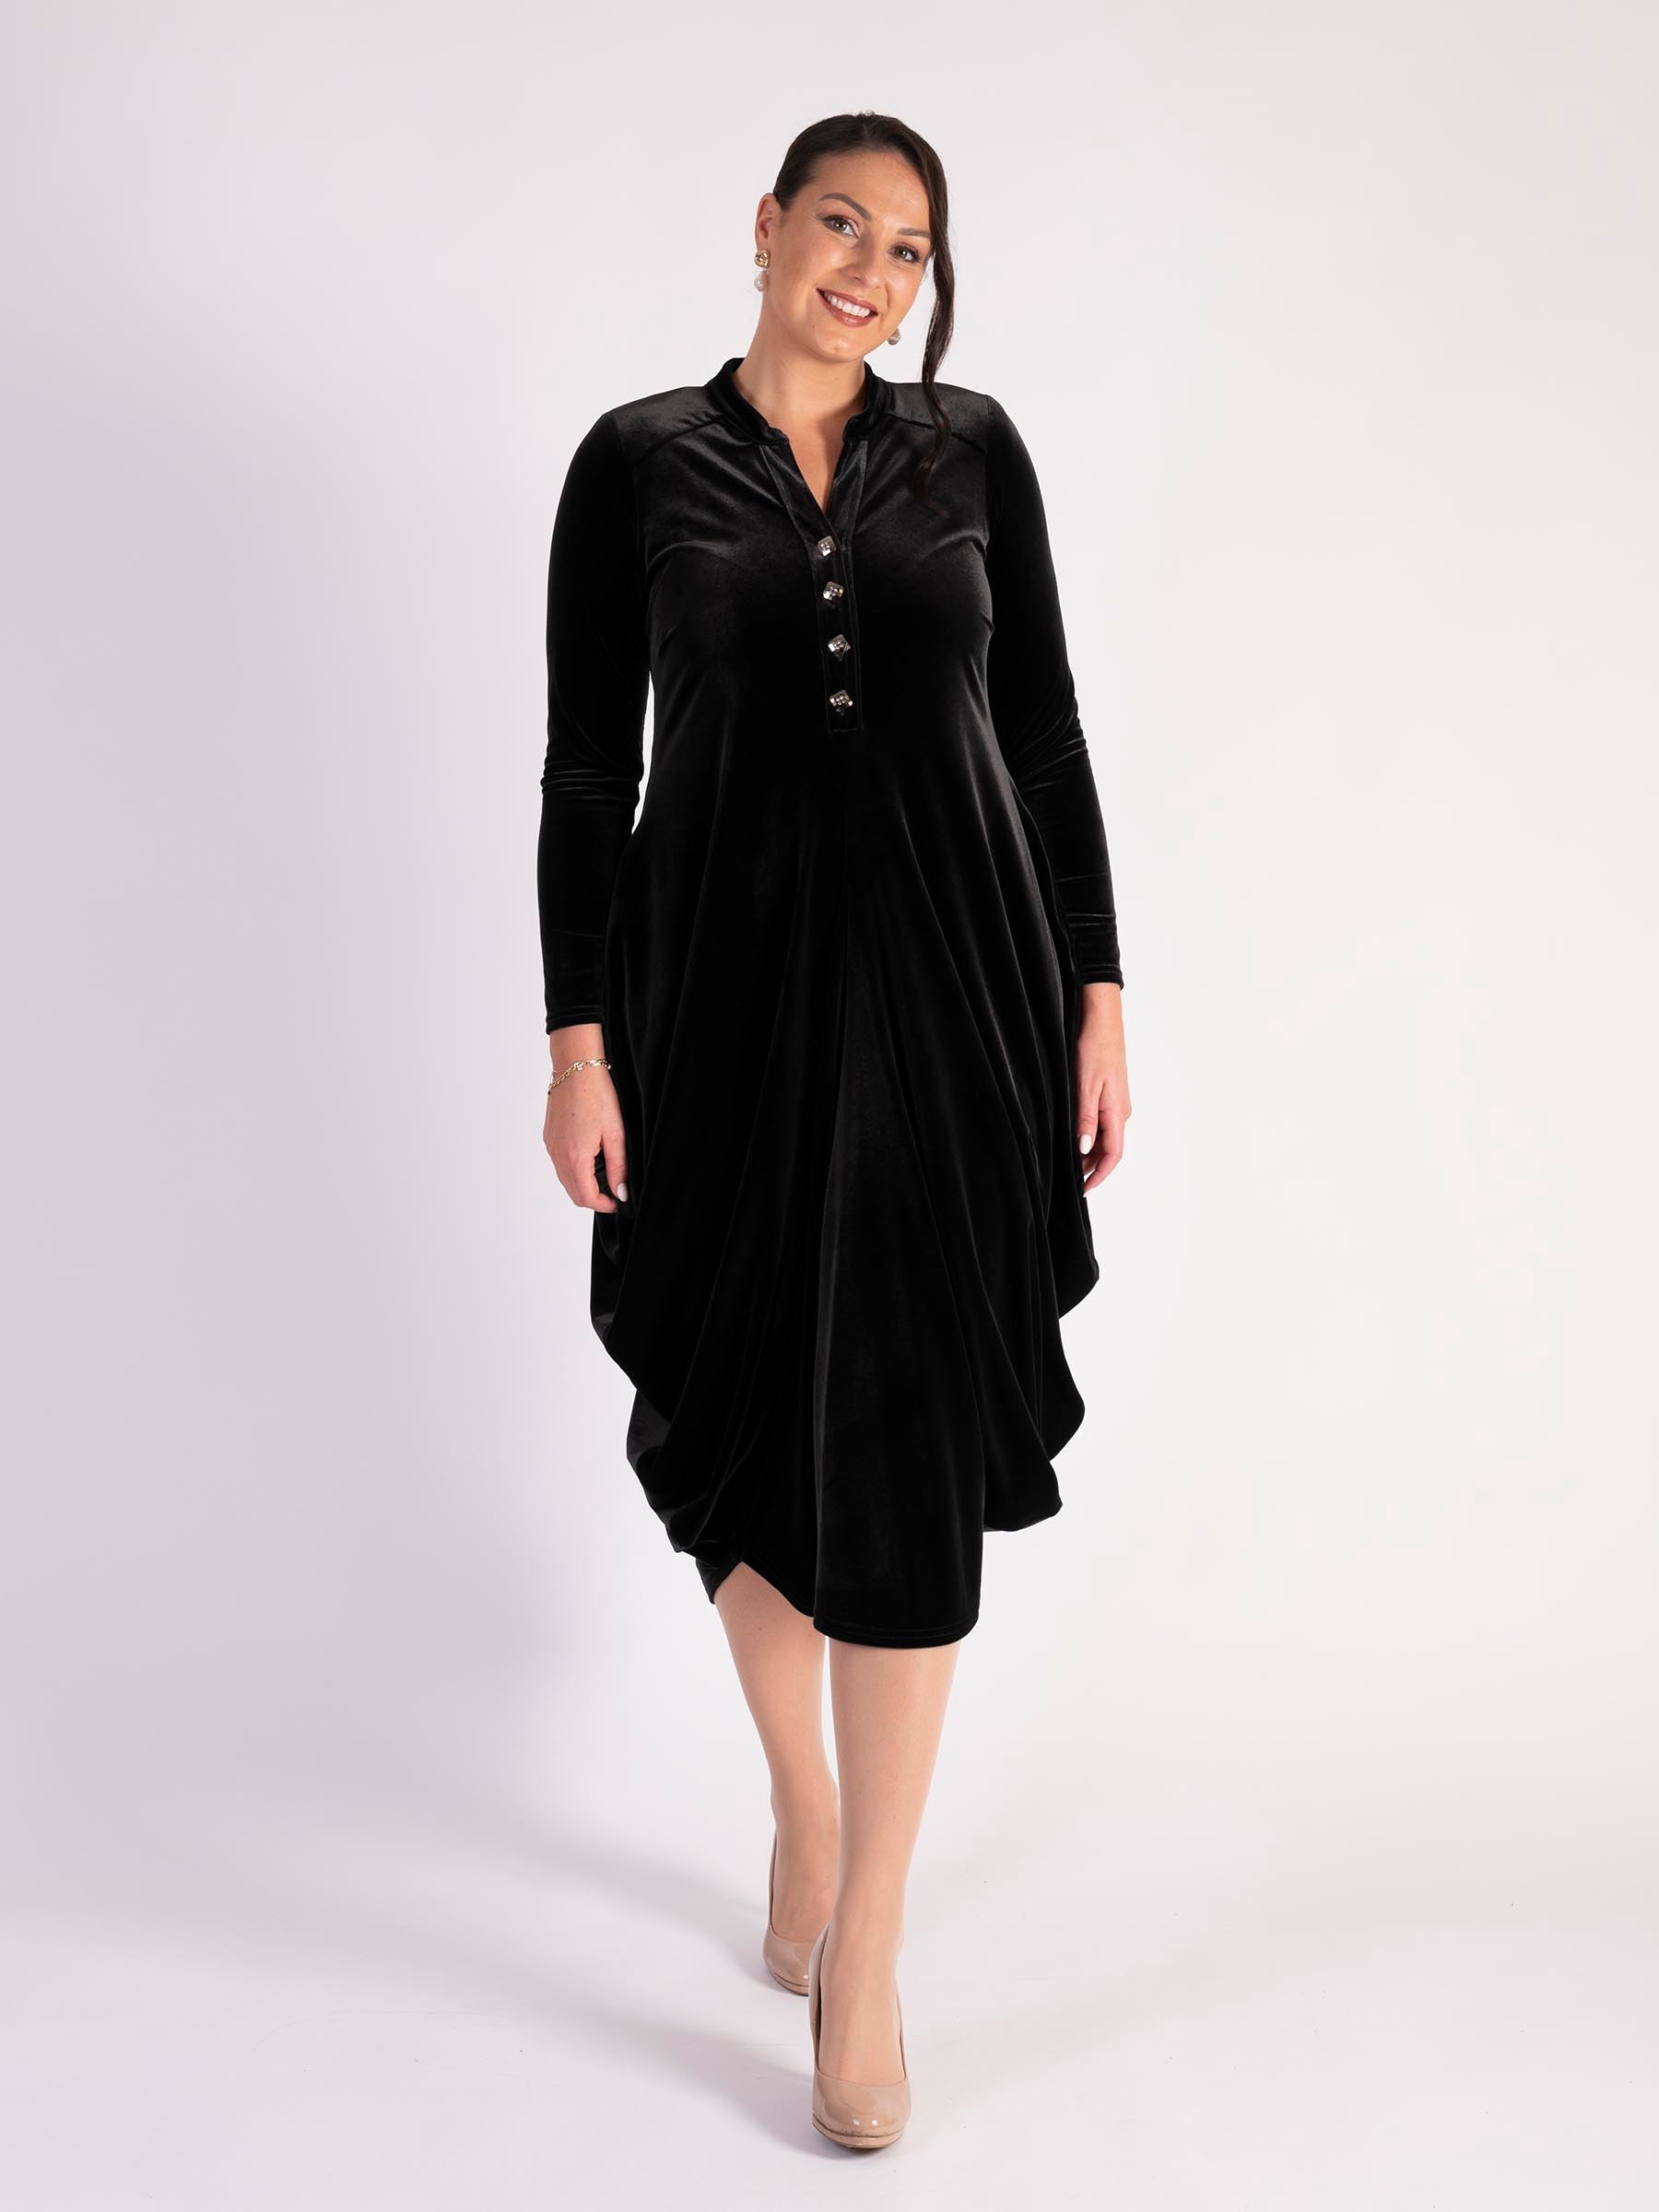 Black Stretch Velvet Drape Dress with Button Placket